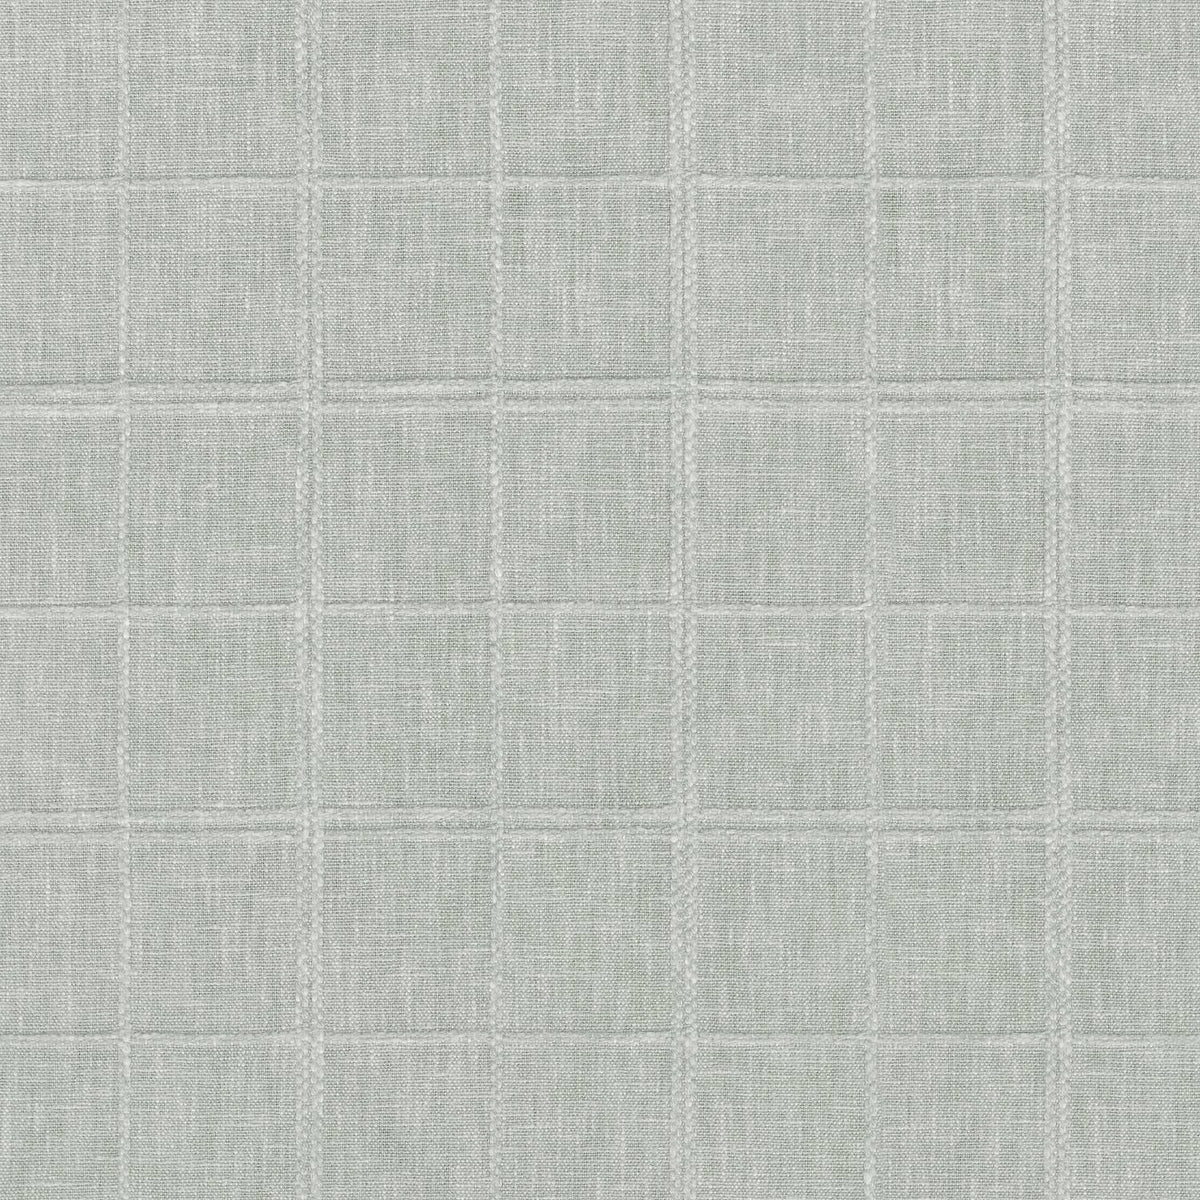 P/K Lifestyles Moray - Fog 410761 Fabric Swatch